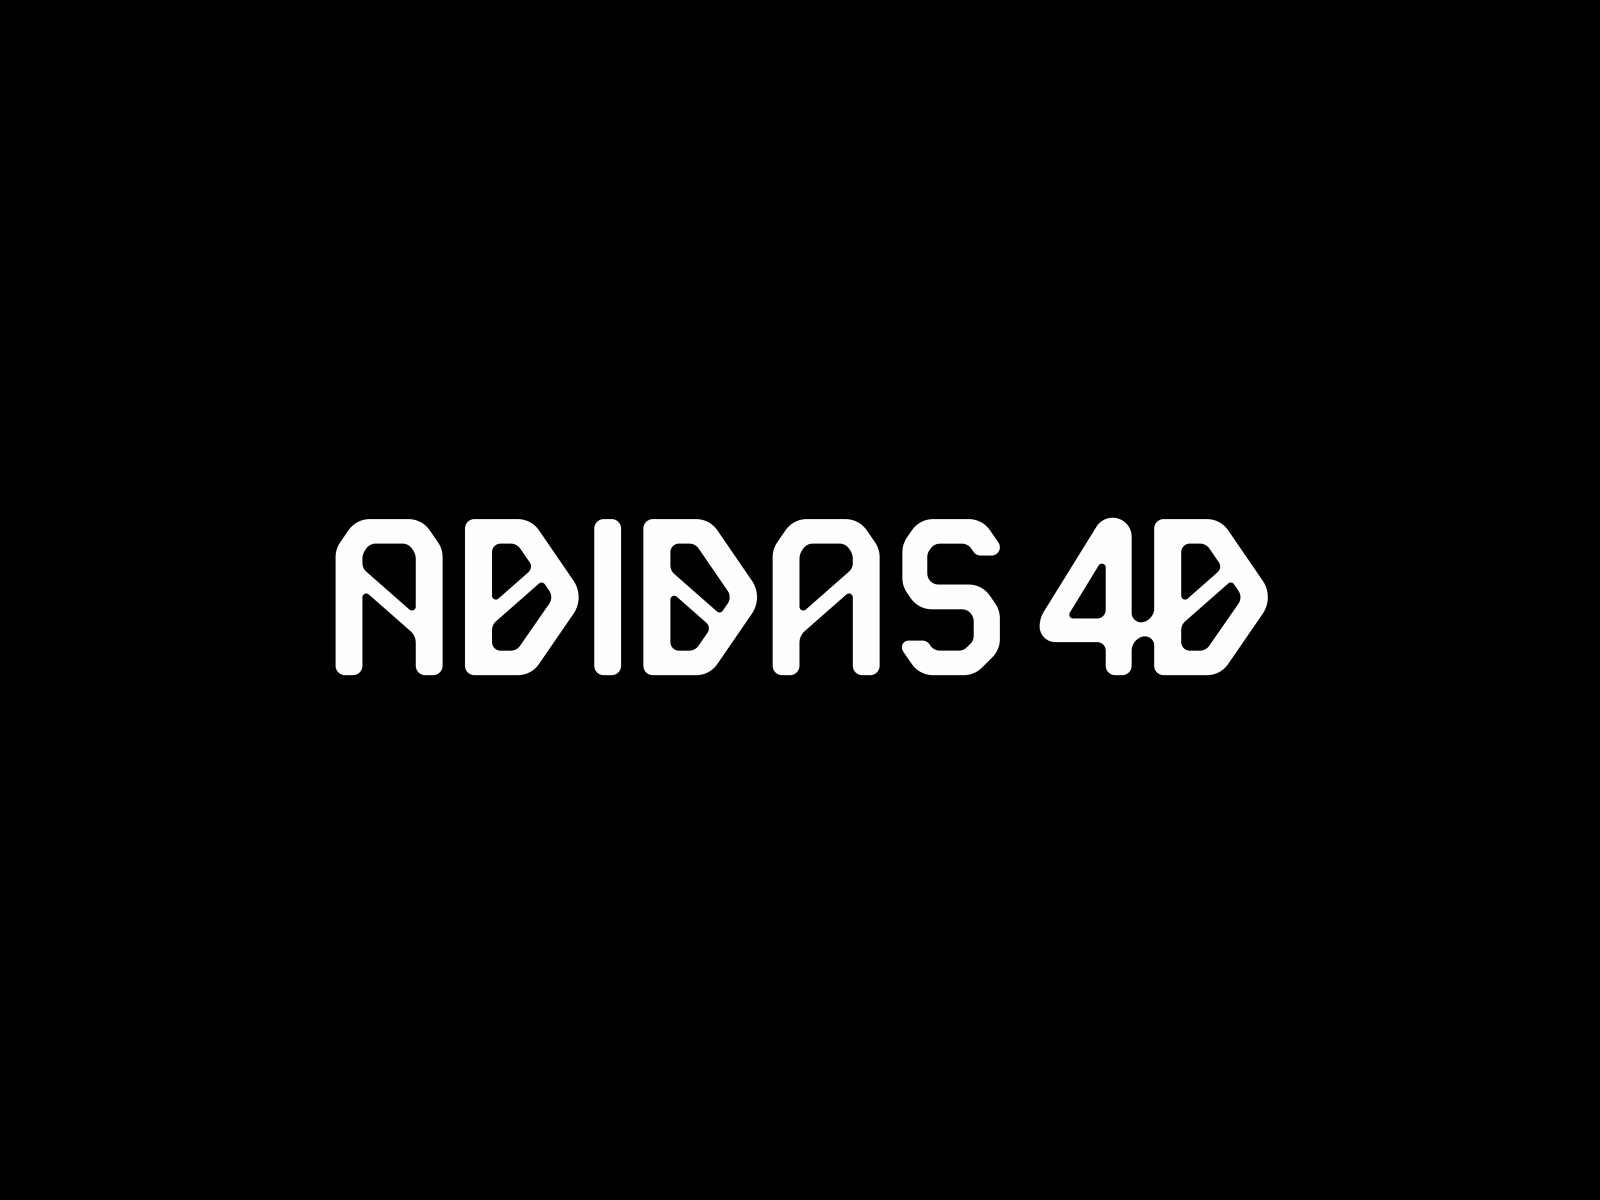 Adidas 4D - logo animation by Jeroen 